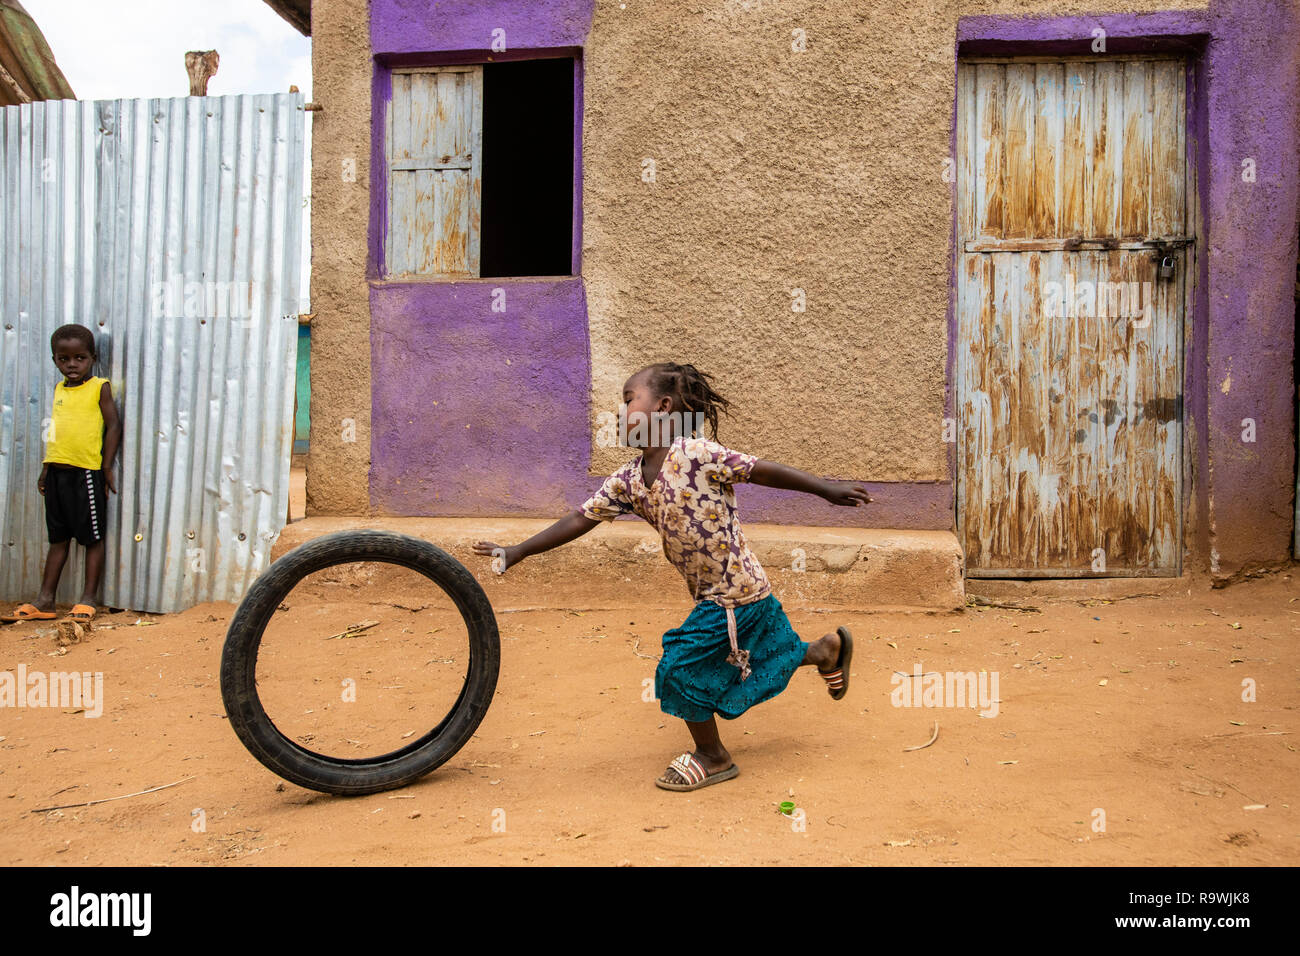 Girl improvising play using bicycle tire in the Turmi market, Ethiopia Stock Photo